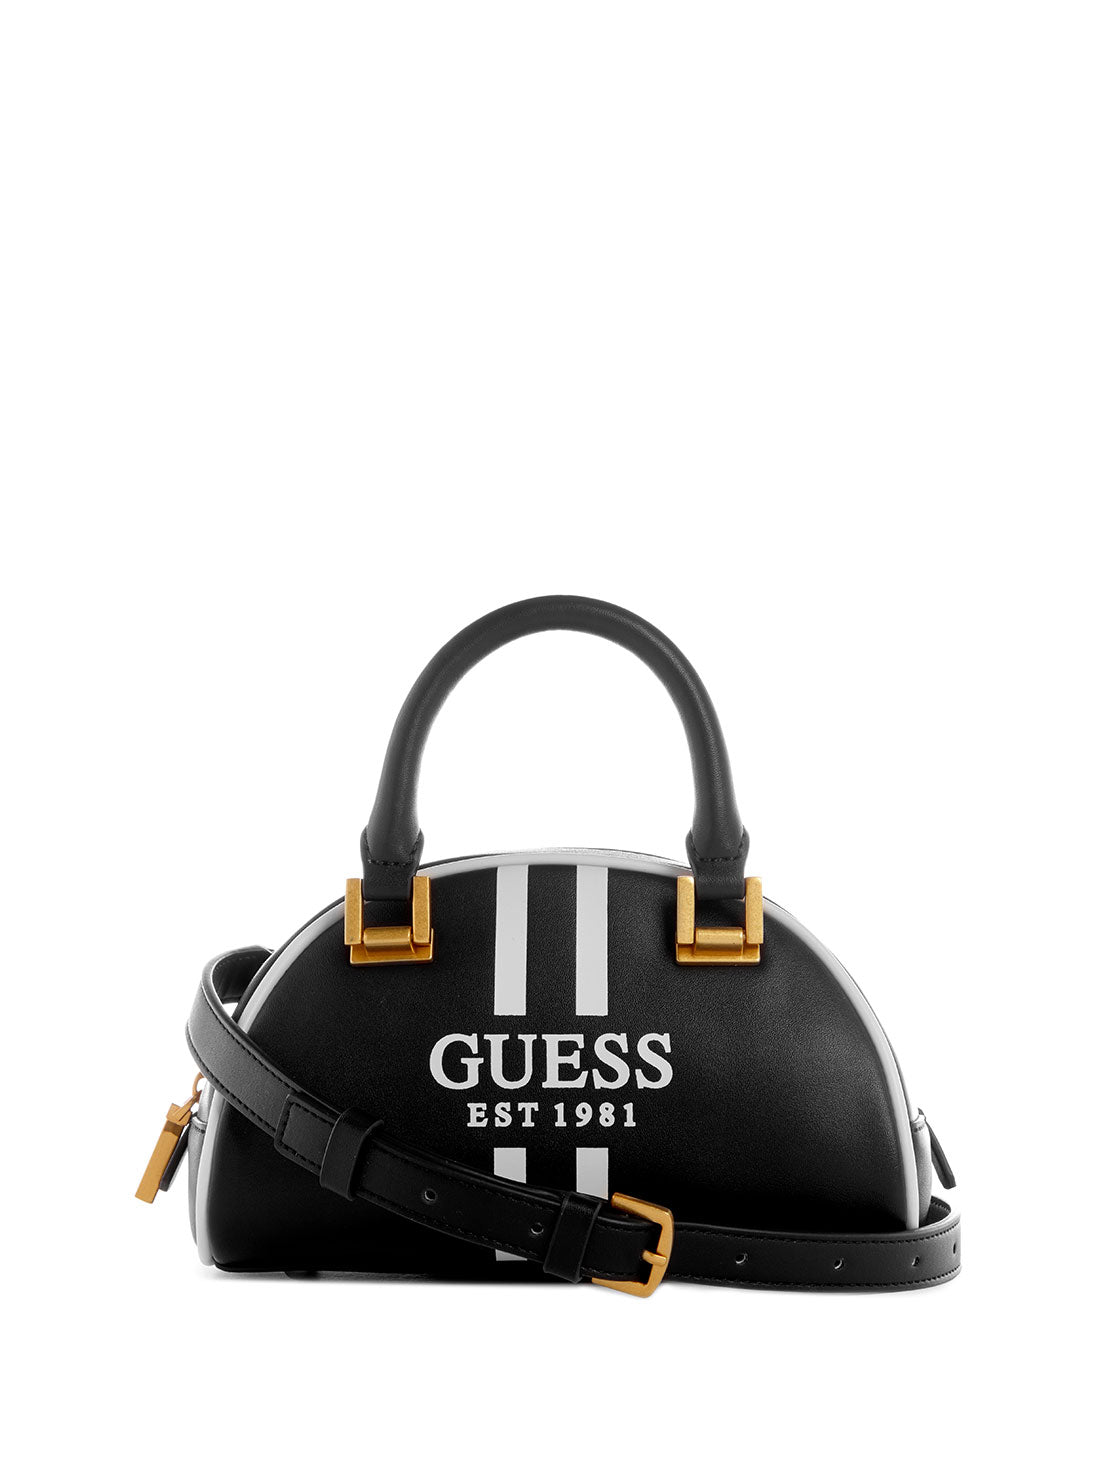 GUESS Women's Black Mildred Mini Bowler Bag VS896206 Front View